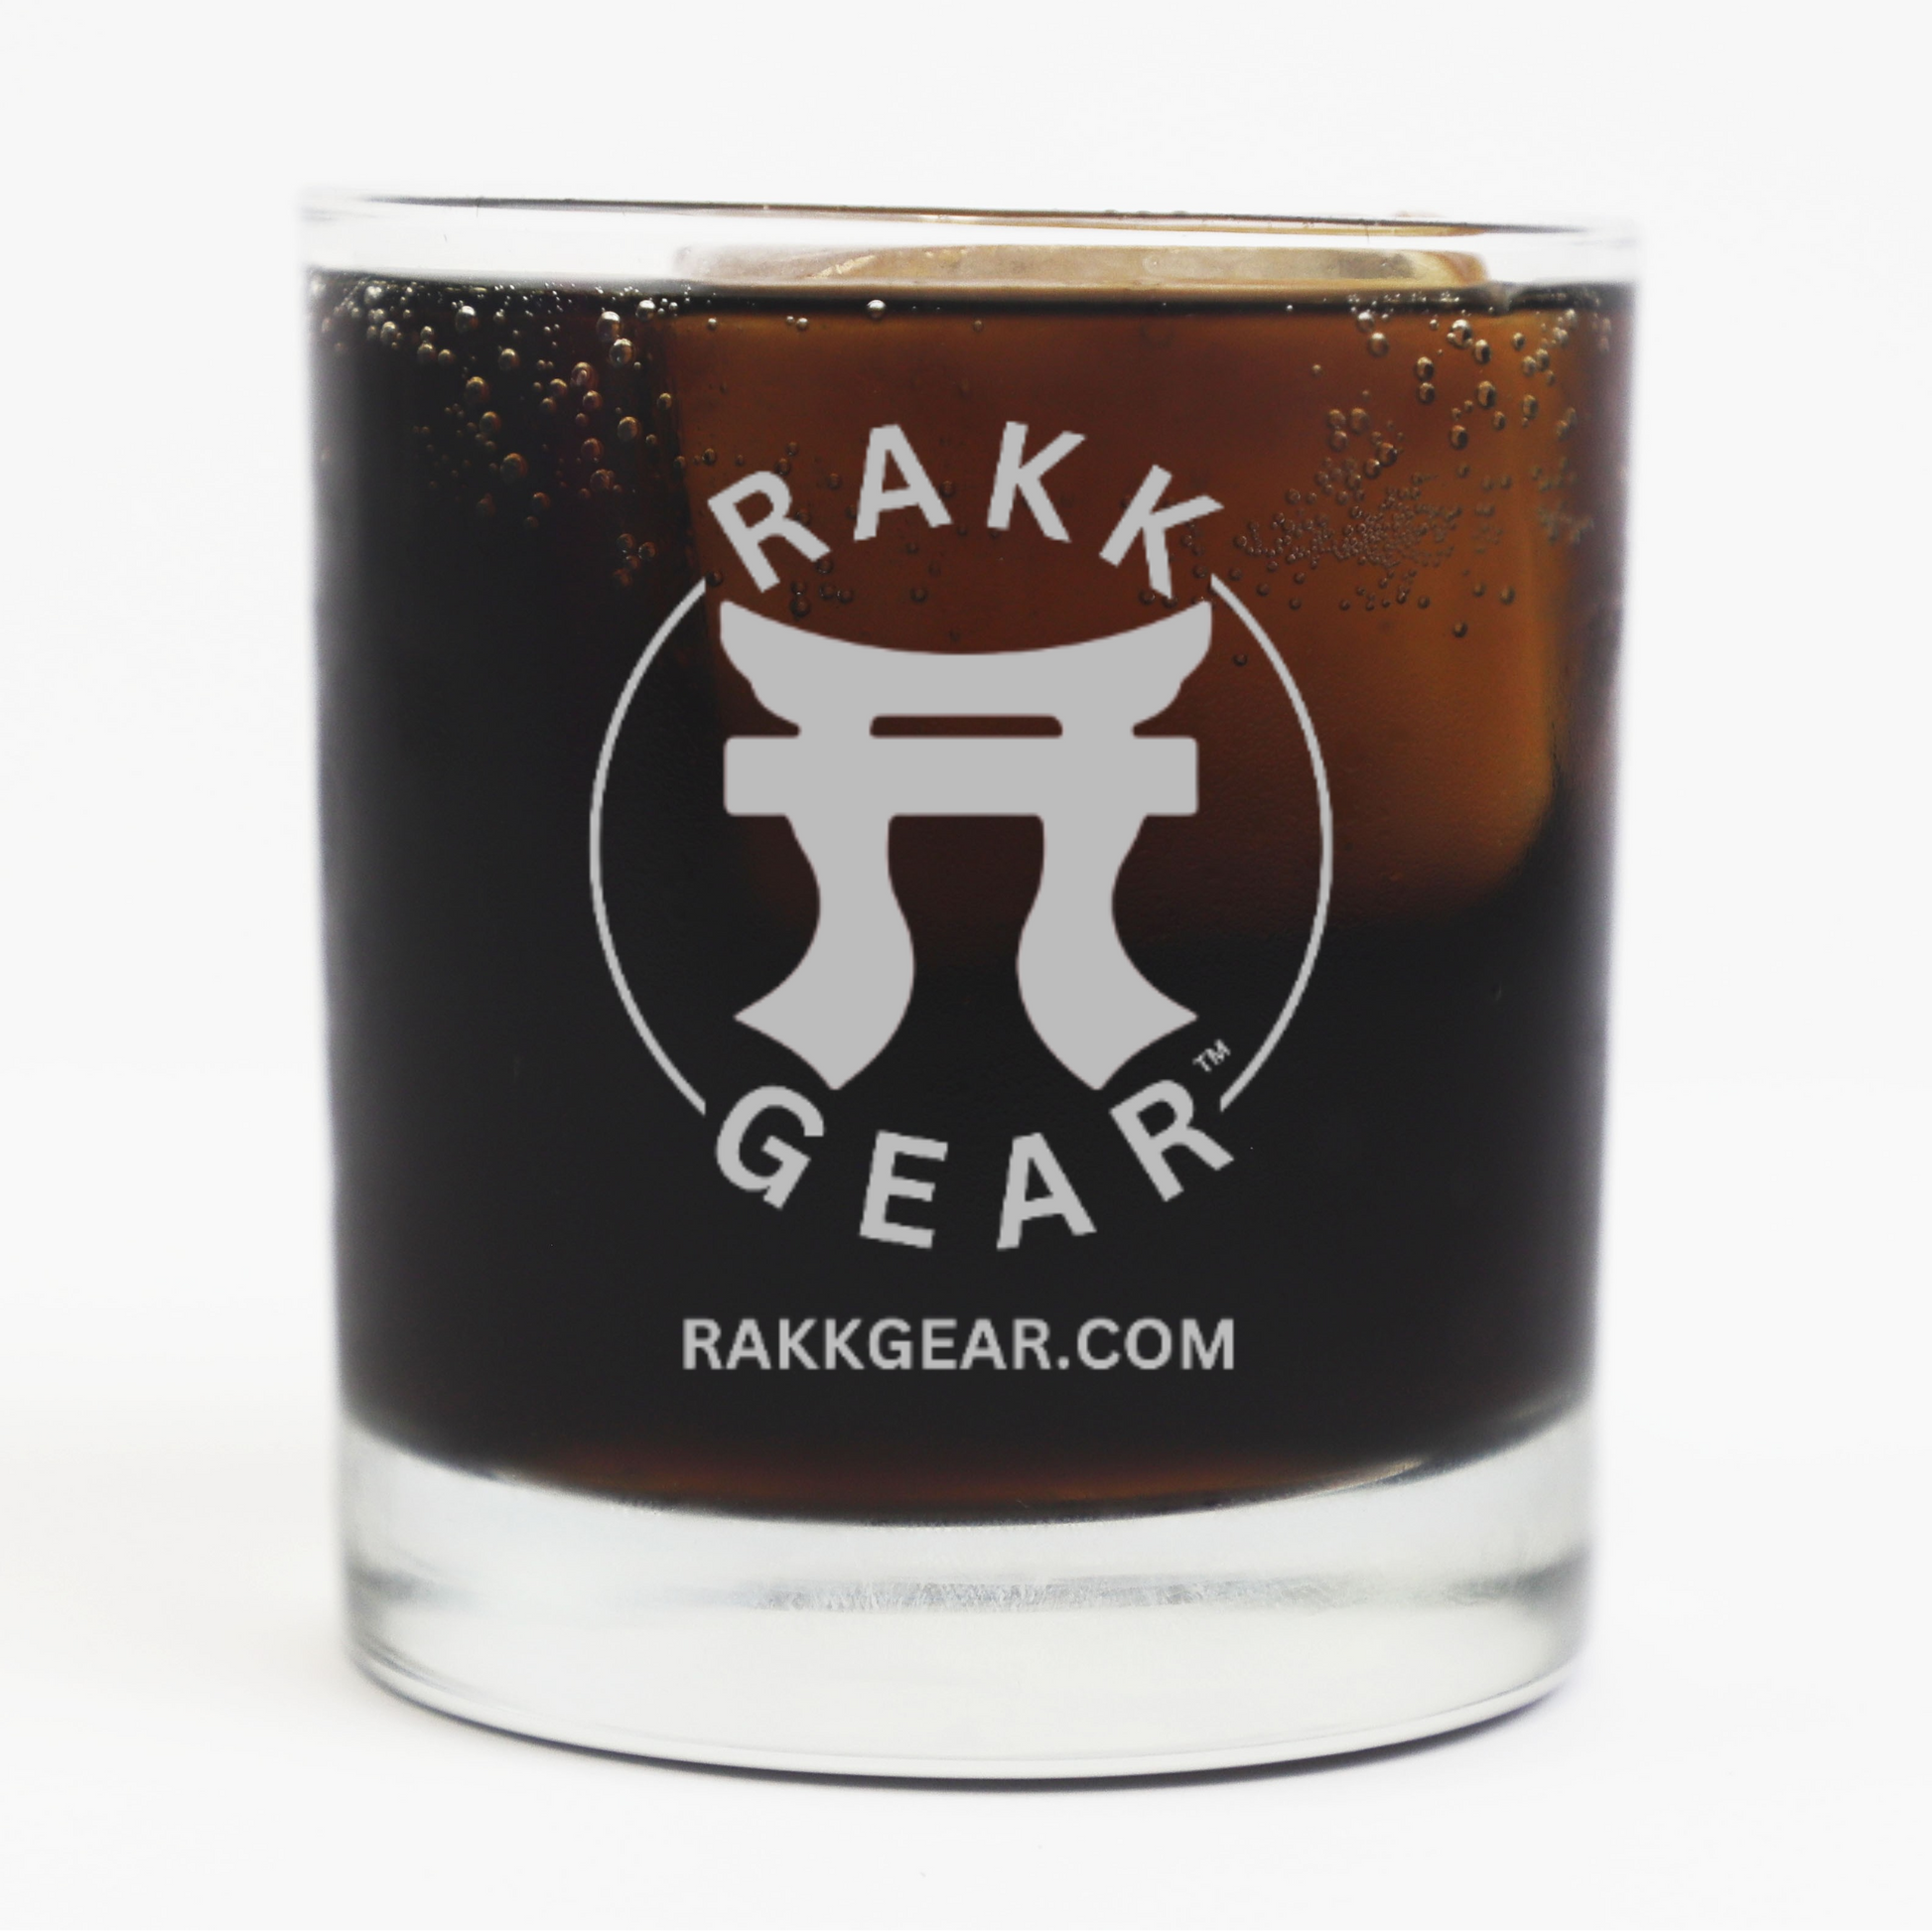 Rakkgear Laser Etched Whiskey Glass - An elegant whiskey glass with the Rakkgear logo etched on its surface.